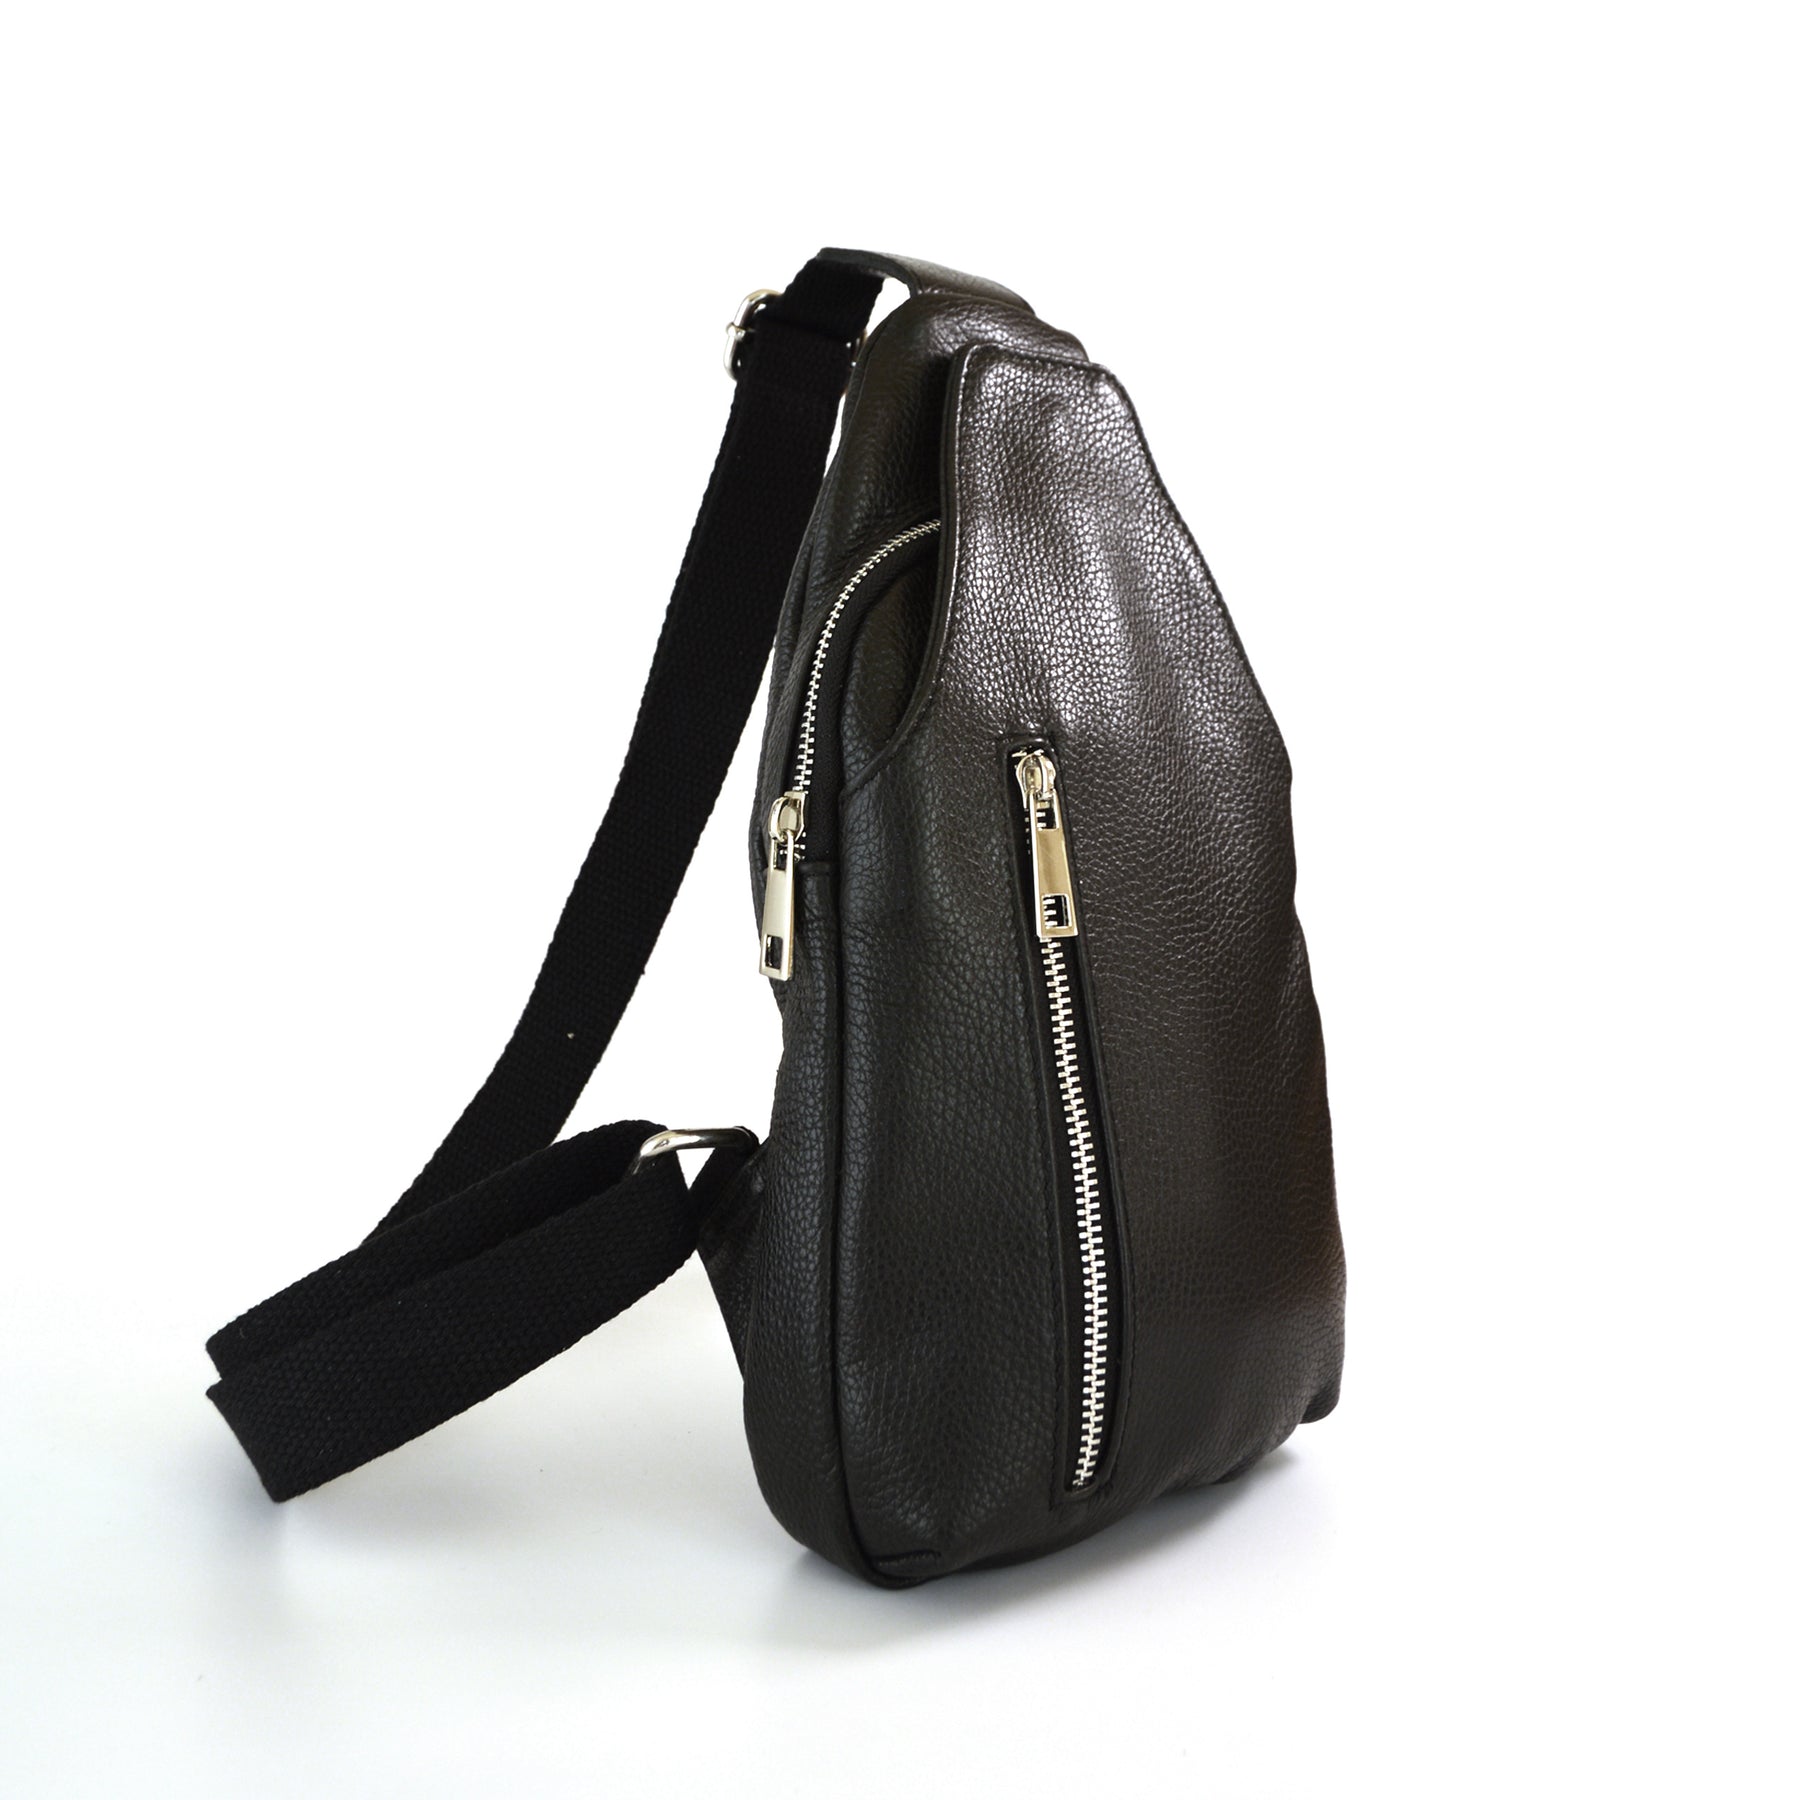 The Milano Sling Bag Black